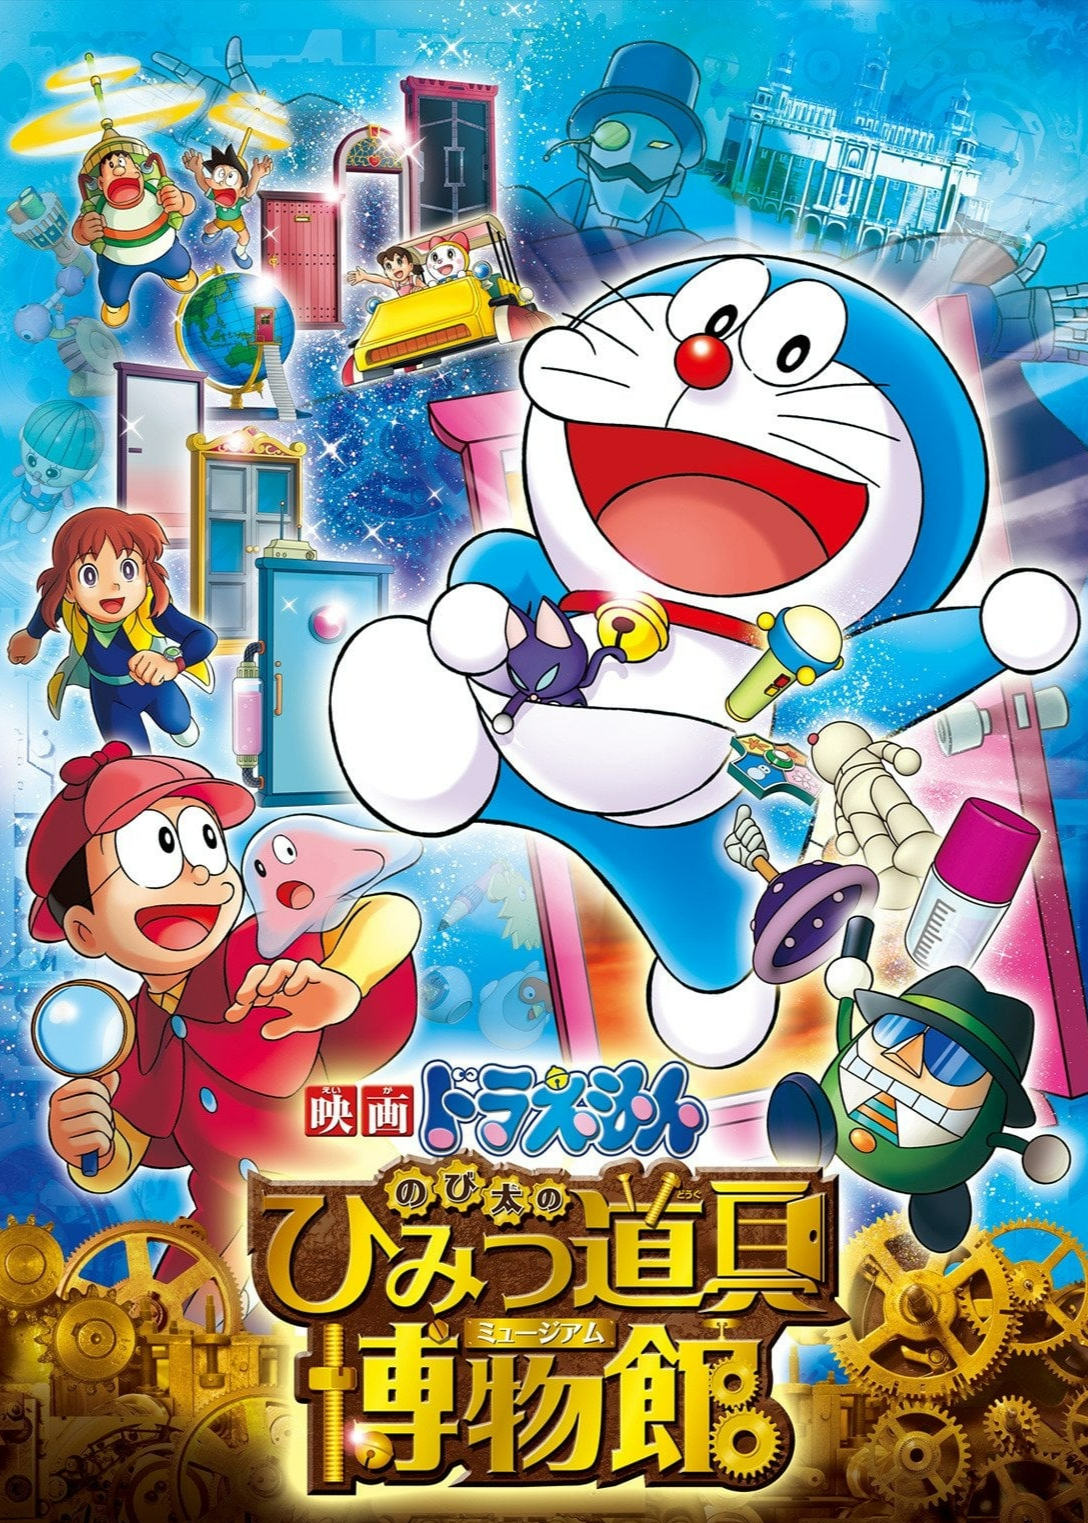 Poster Phim Doraemon: Nobita Và Viện Bảo Tàng Bảo Bối (Doraemon the Movie: Nobita's Secret Gadget Museum)